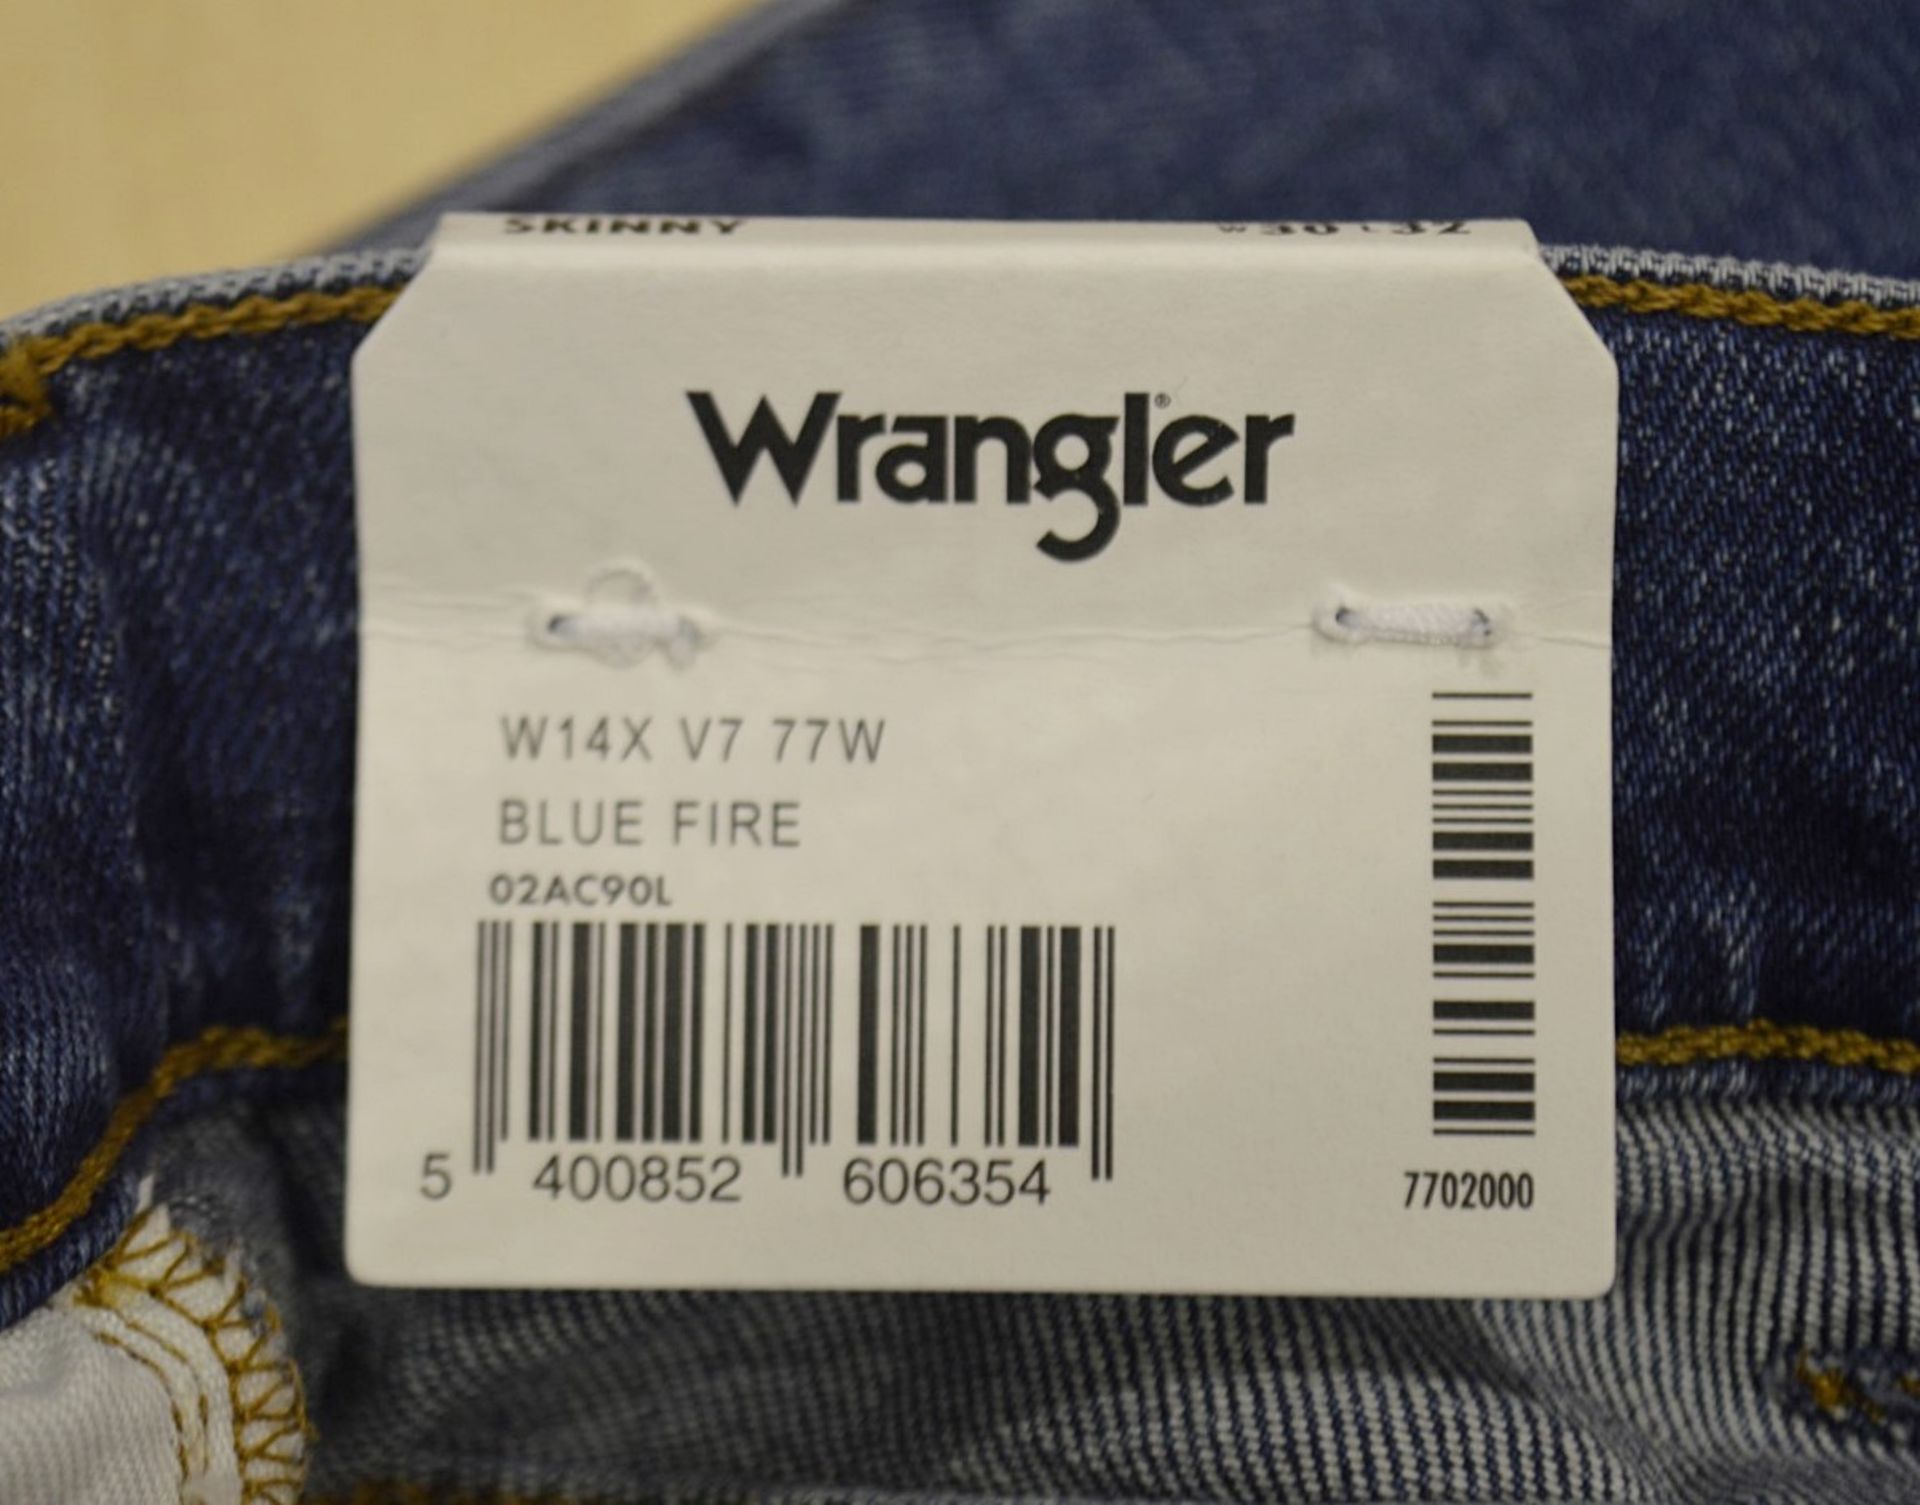 1 x Pair Of Men's Genuine Wrangler BRYSON Skinny Jeans In Blue - Size: UK 30/32 - Preowned, Like - Image 6 of 10